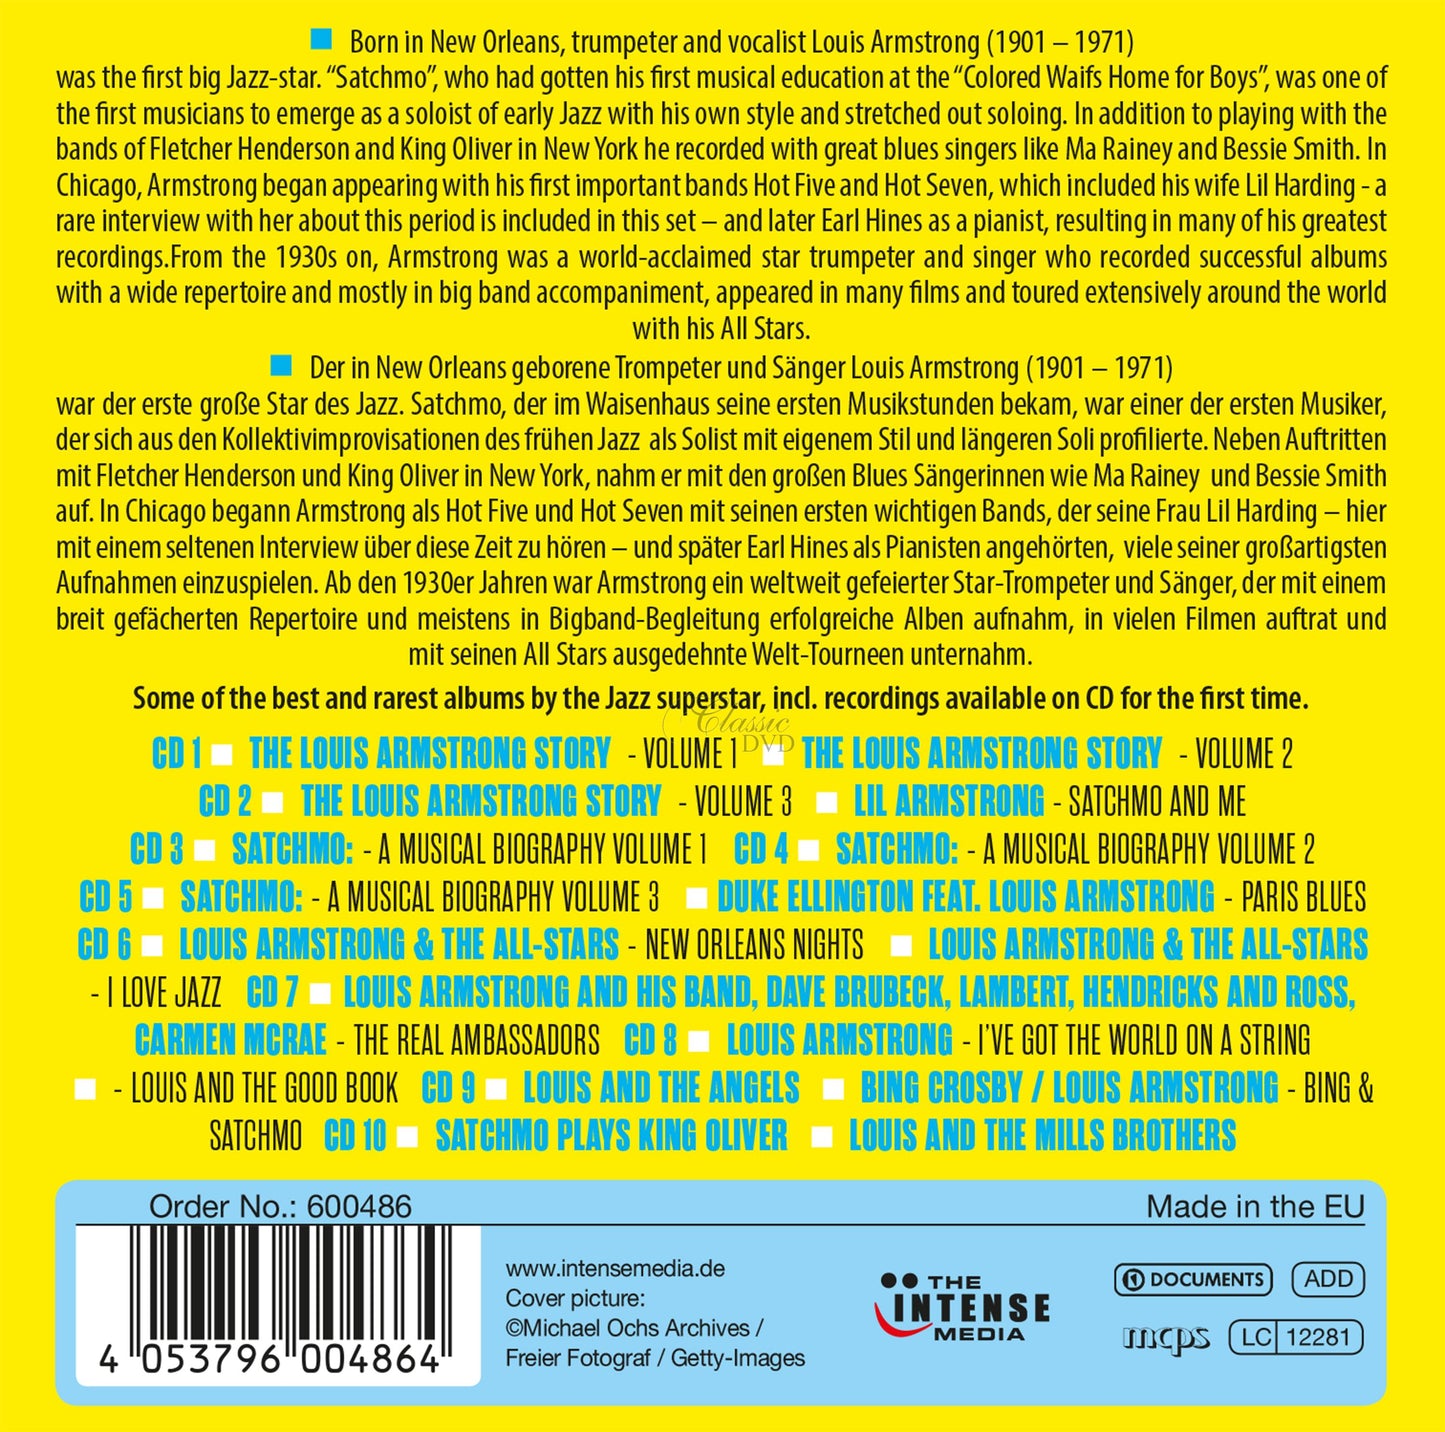 LOUIS ARMSTRONG: CLASSICS & RARITIES - MILESTONES OF A JAZZ LEGEND (10 CDS)